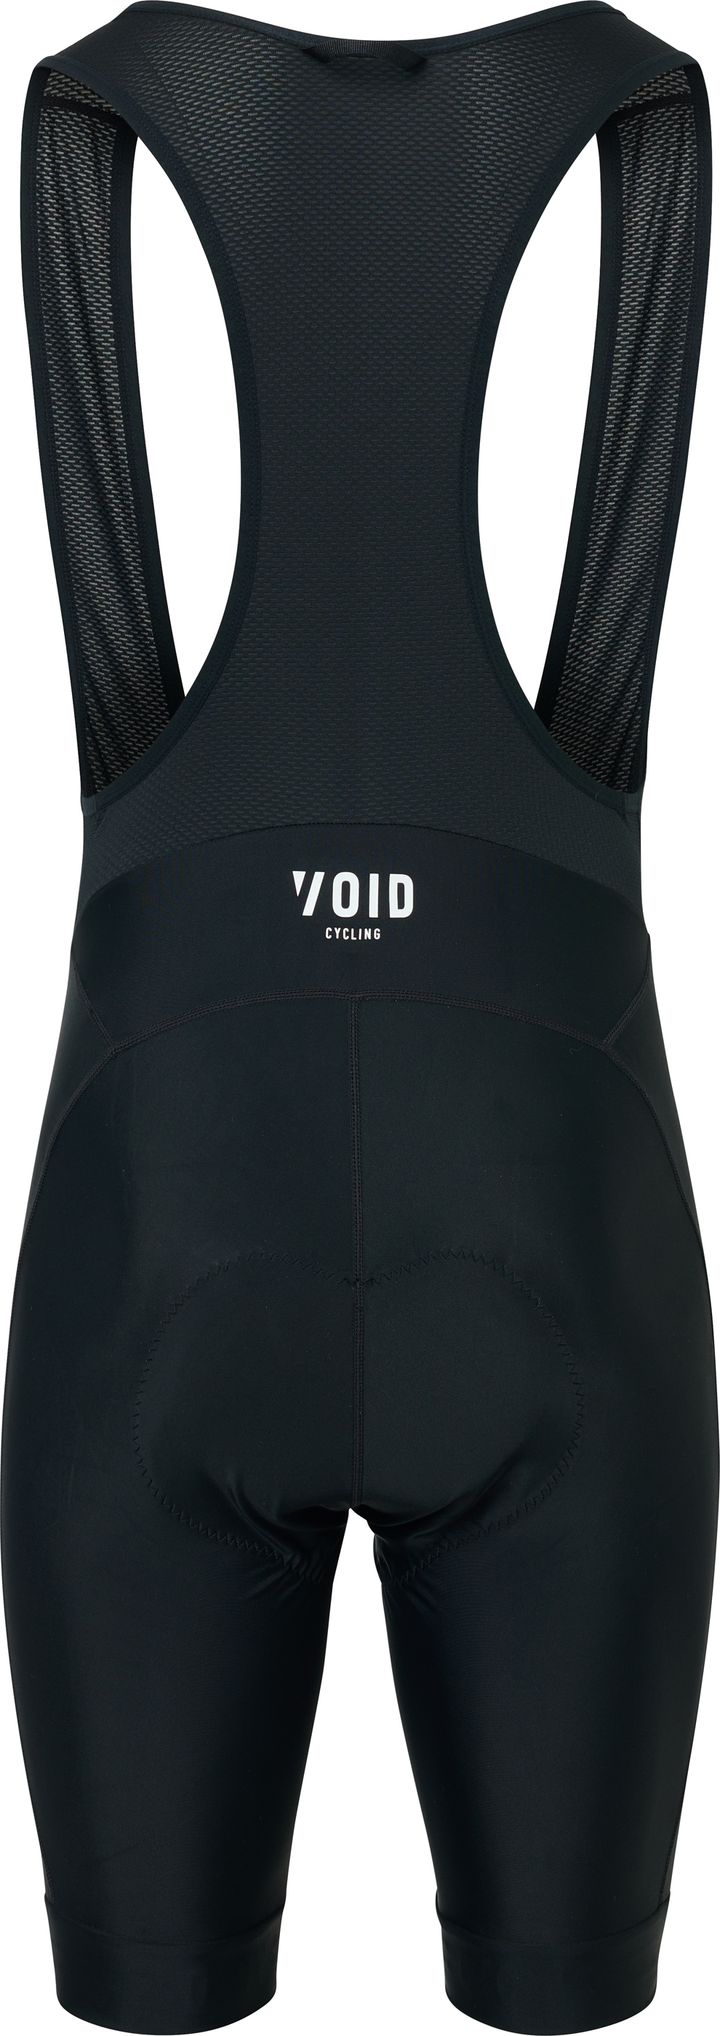 Void Men's Core Bib Shorts Black Void